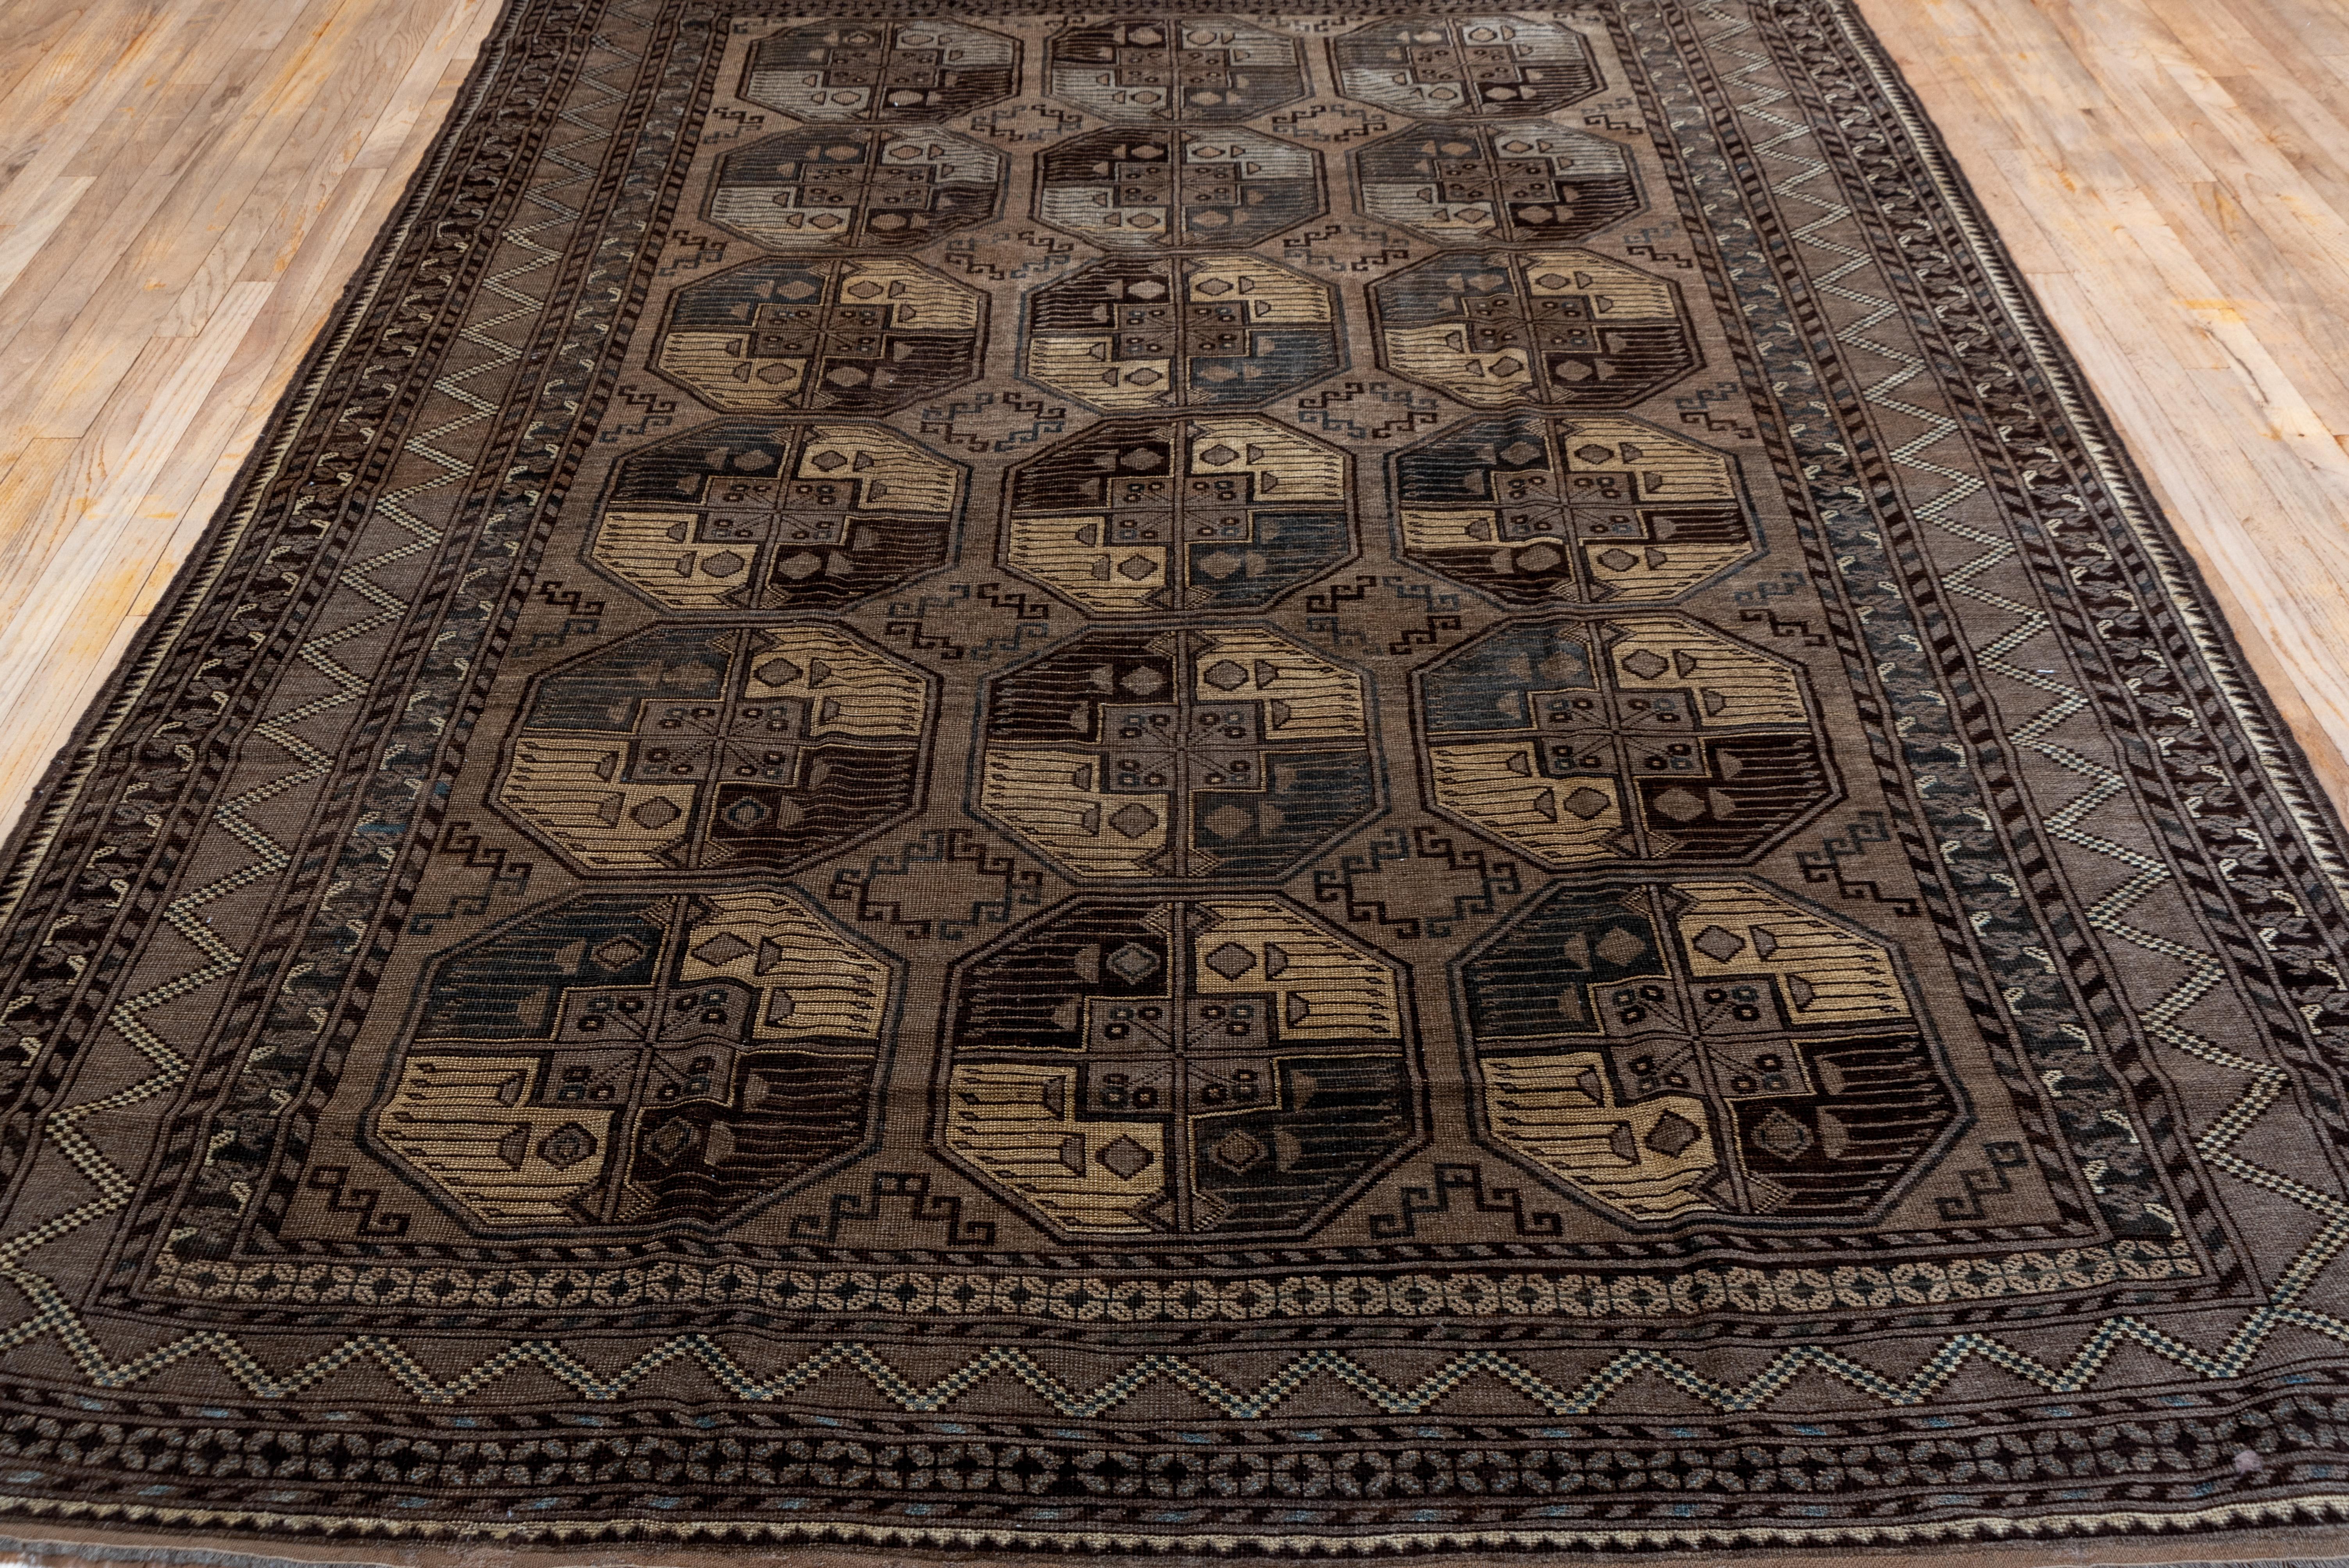 Hand-Knotted Antique Afghan Ersari Carpet, Turkmen Pattern, Circa 1930s, Brown & Gold Tones For Sale